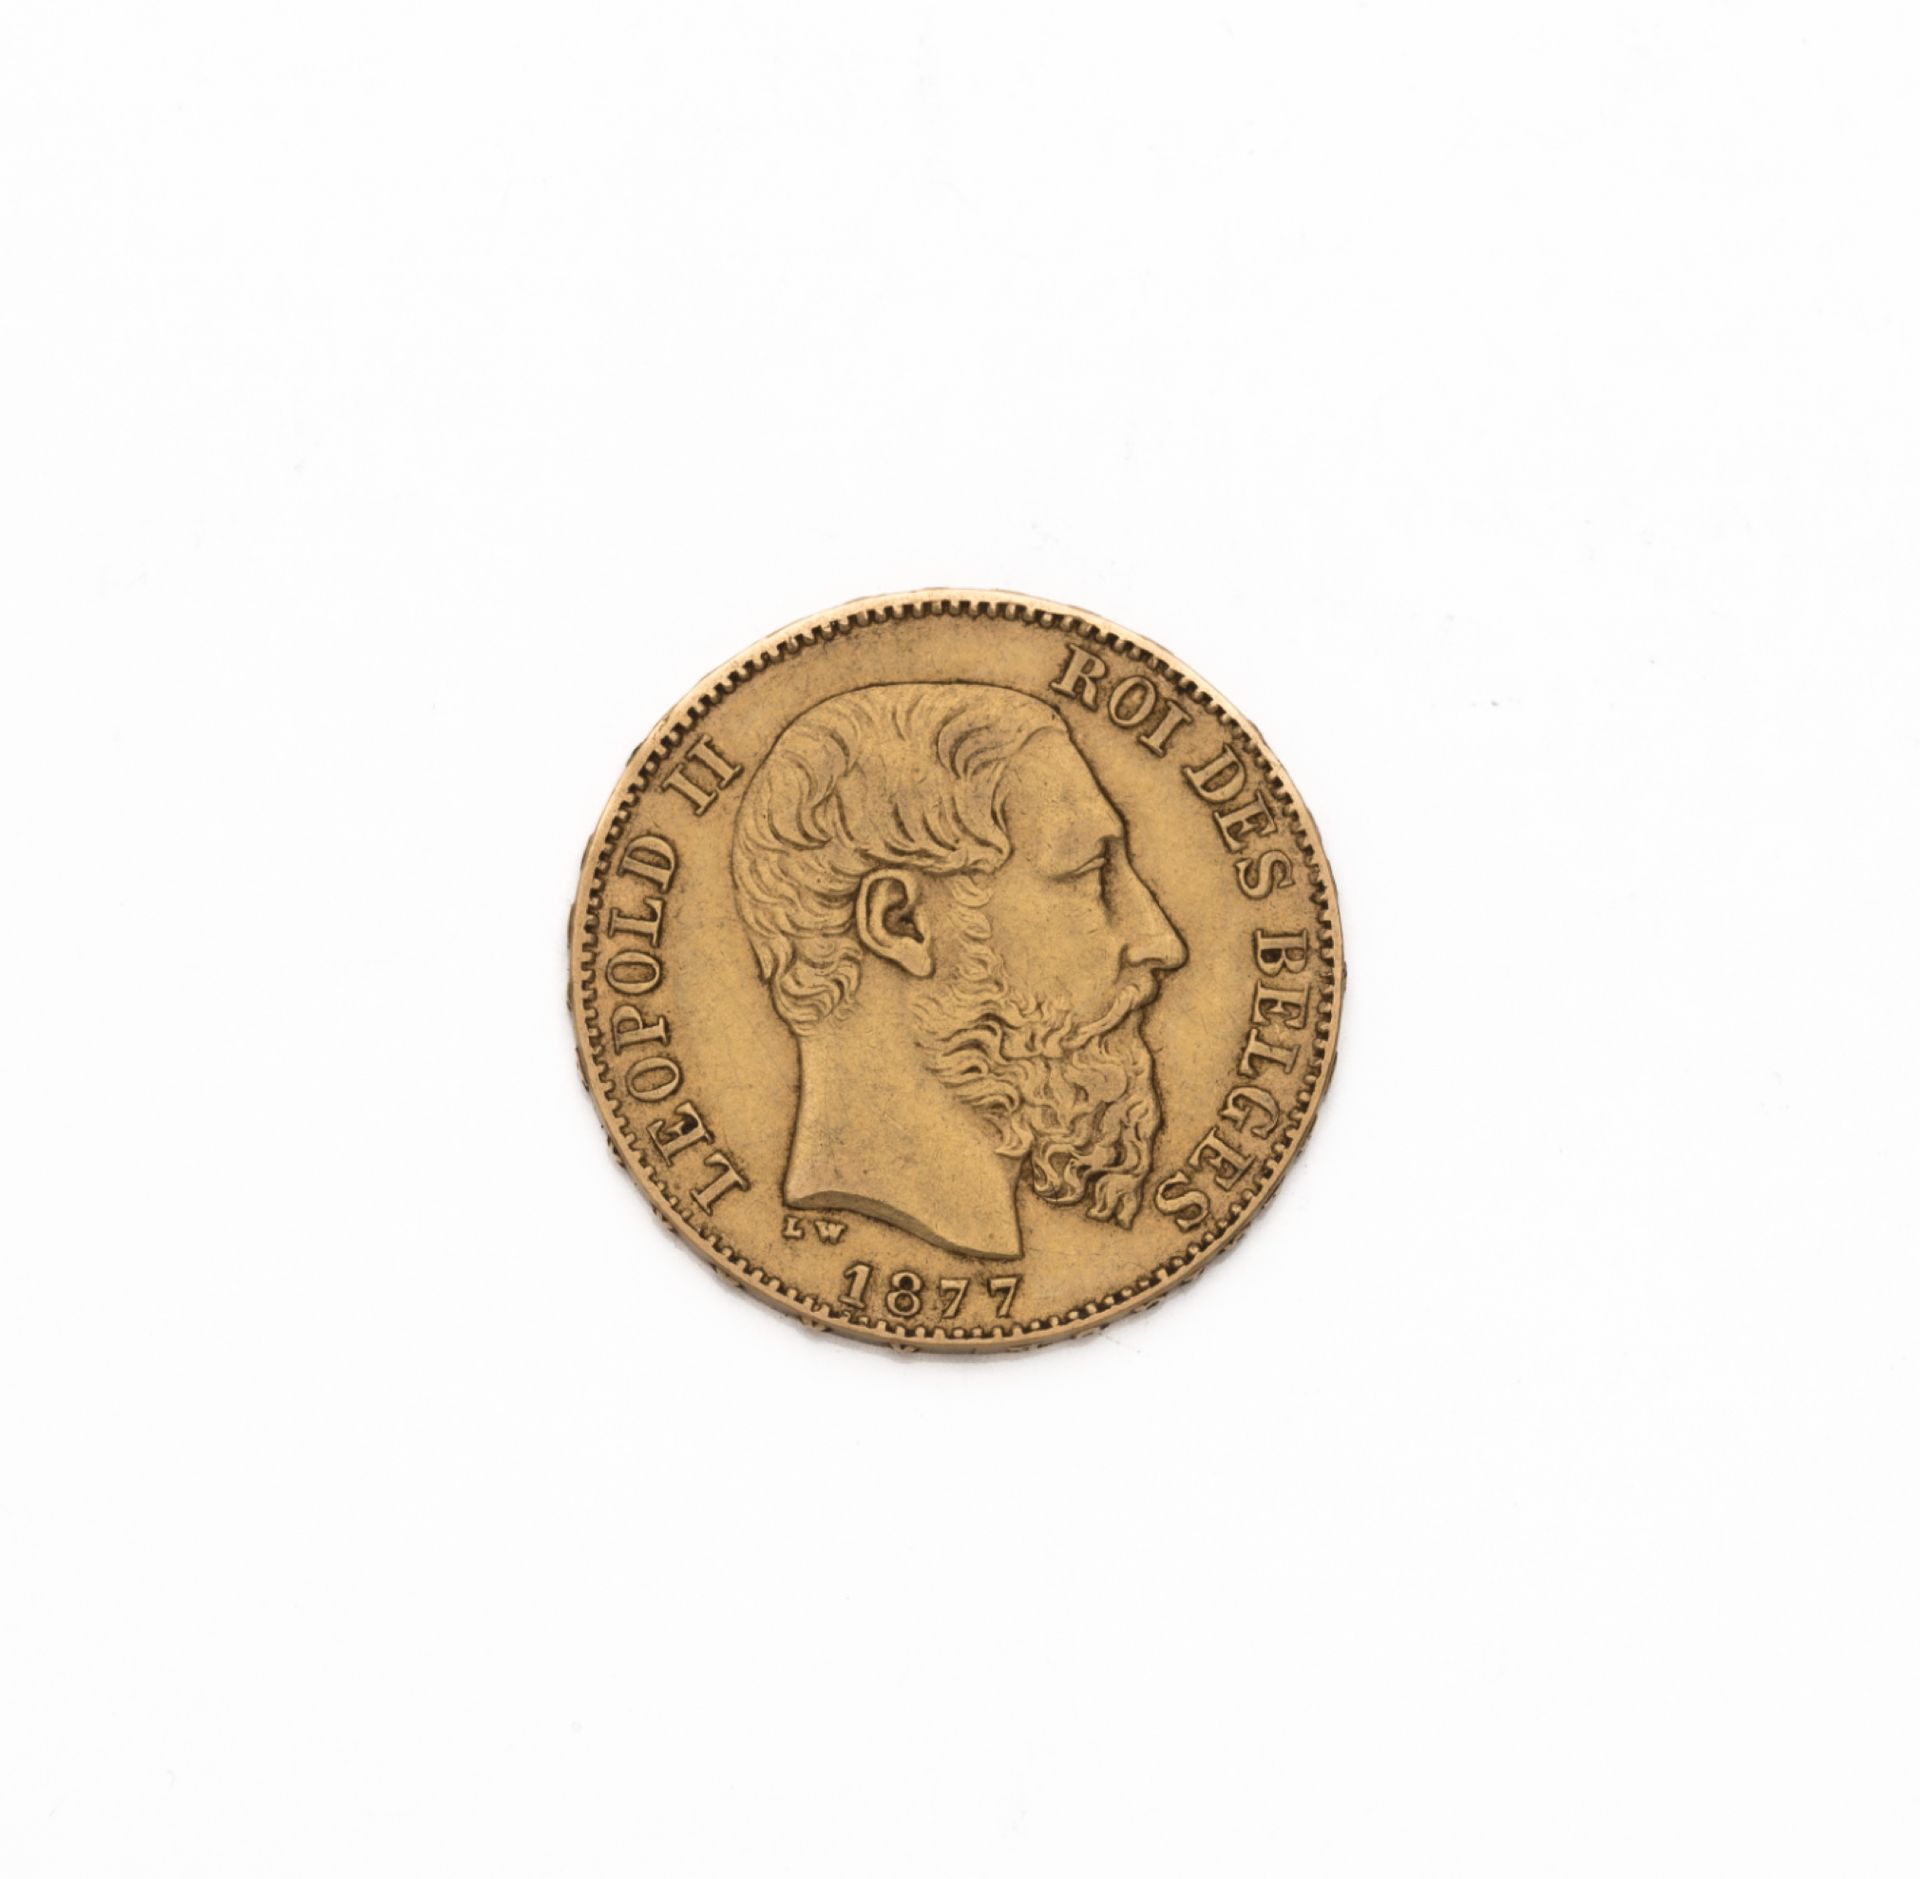 Null BÉLGICA
20 francos de oro, Leopoldo II. 1877 
Peso : 6,4 g